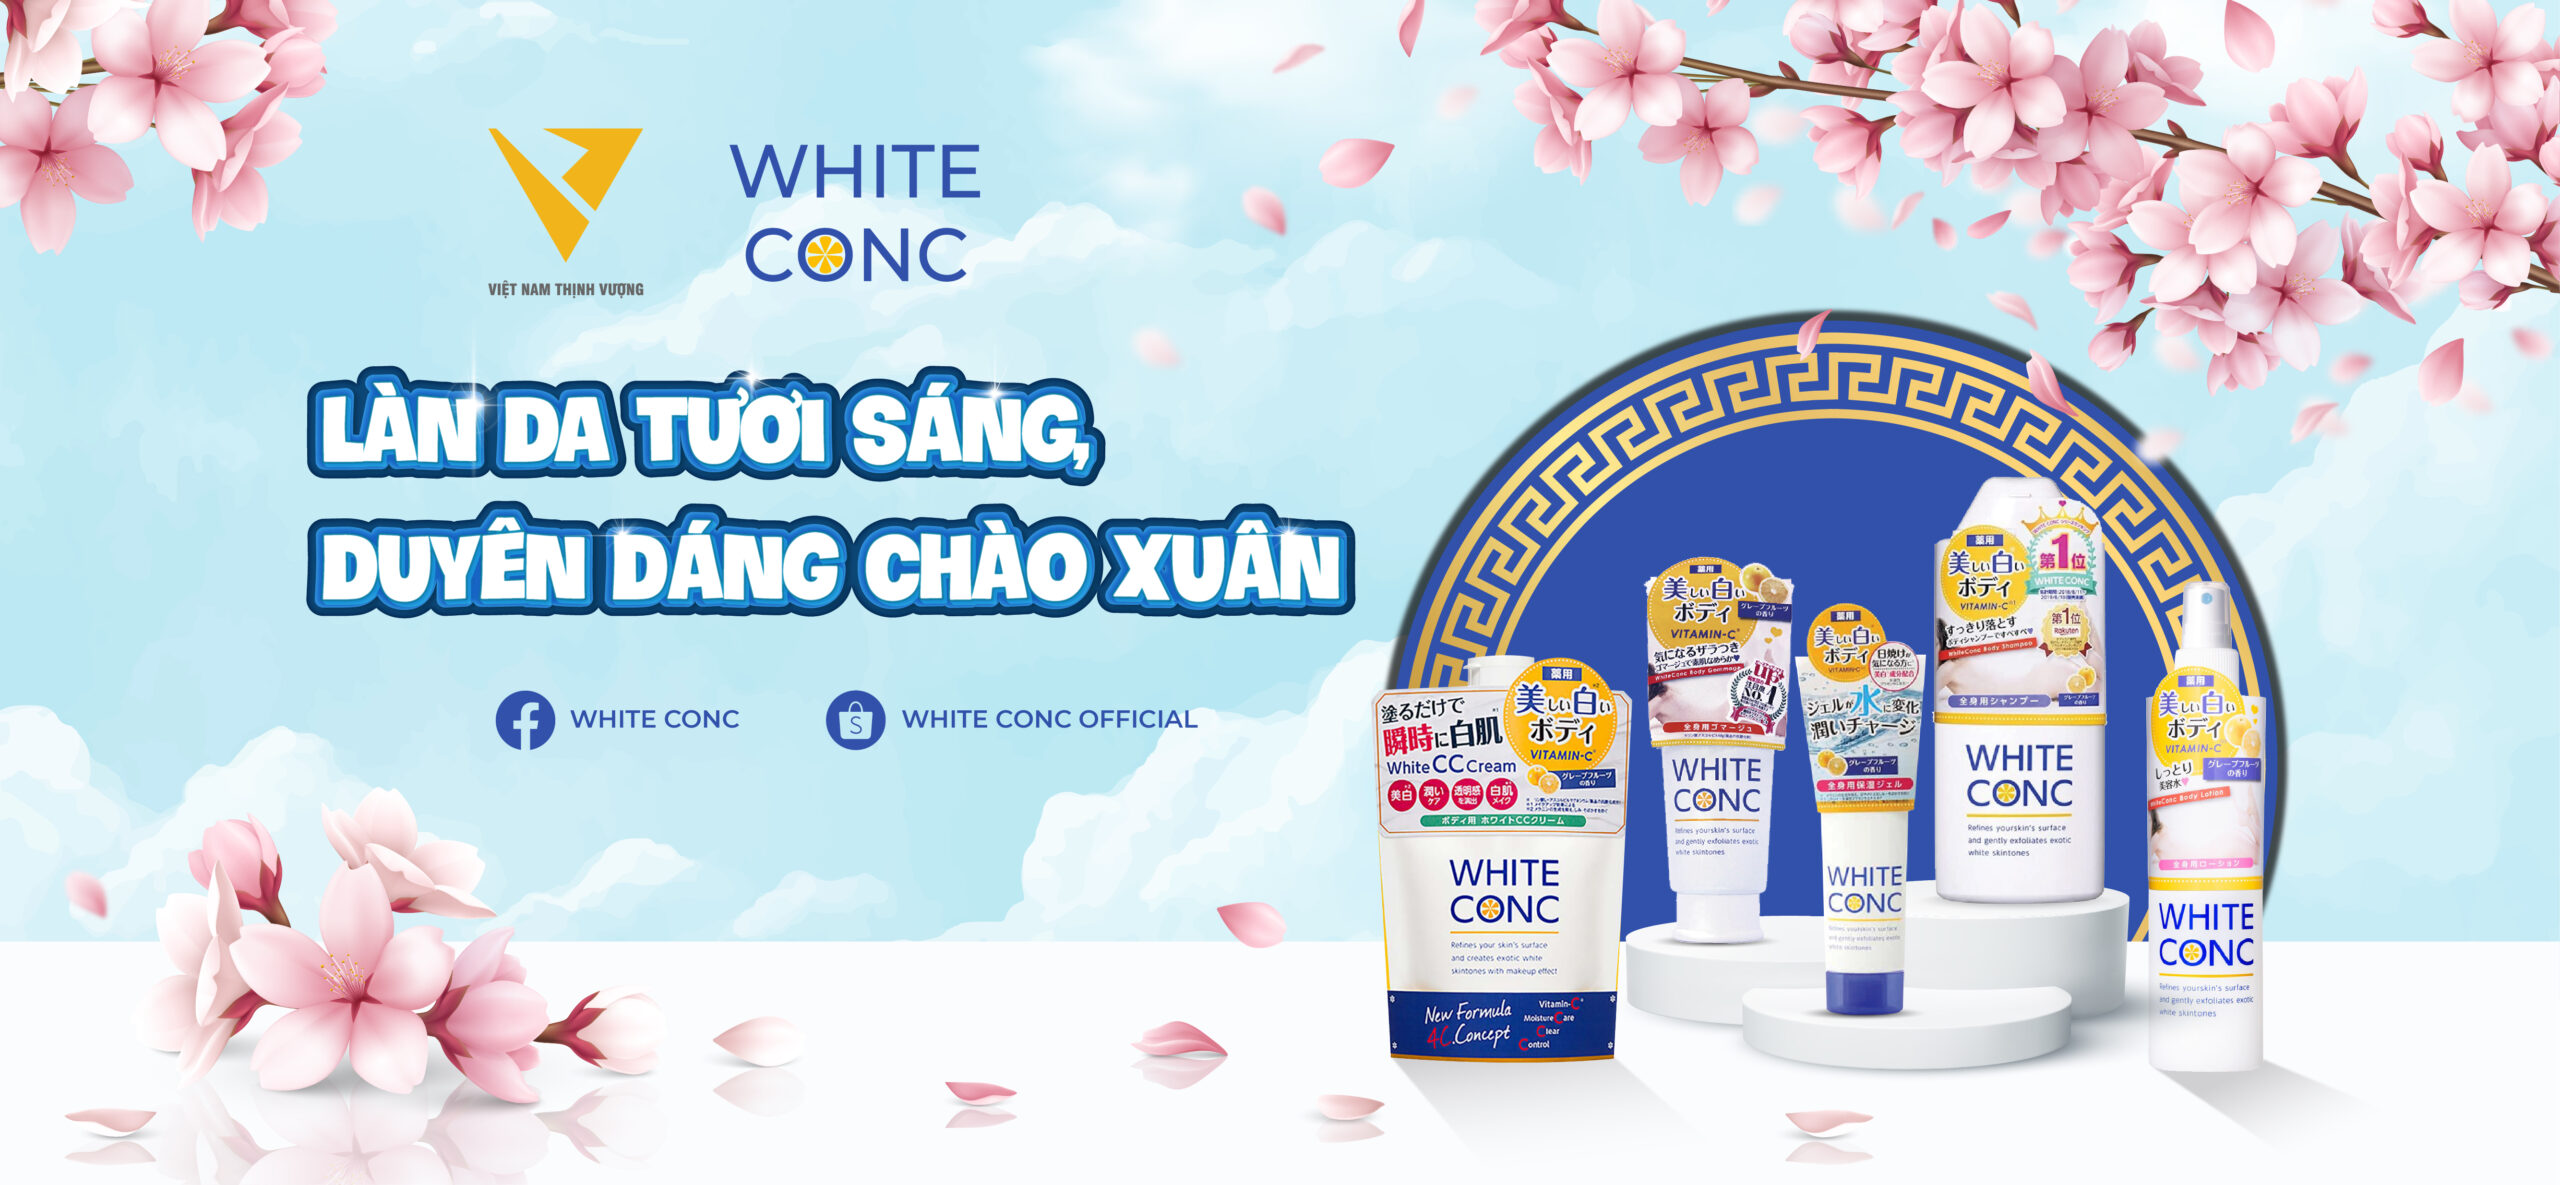 lan-da-tuoi-sang-duyen-dang-chao-xuan-white-conc-vietnamthinhvuong